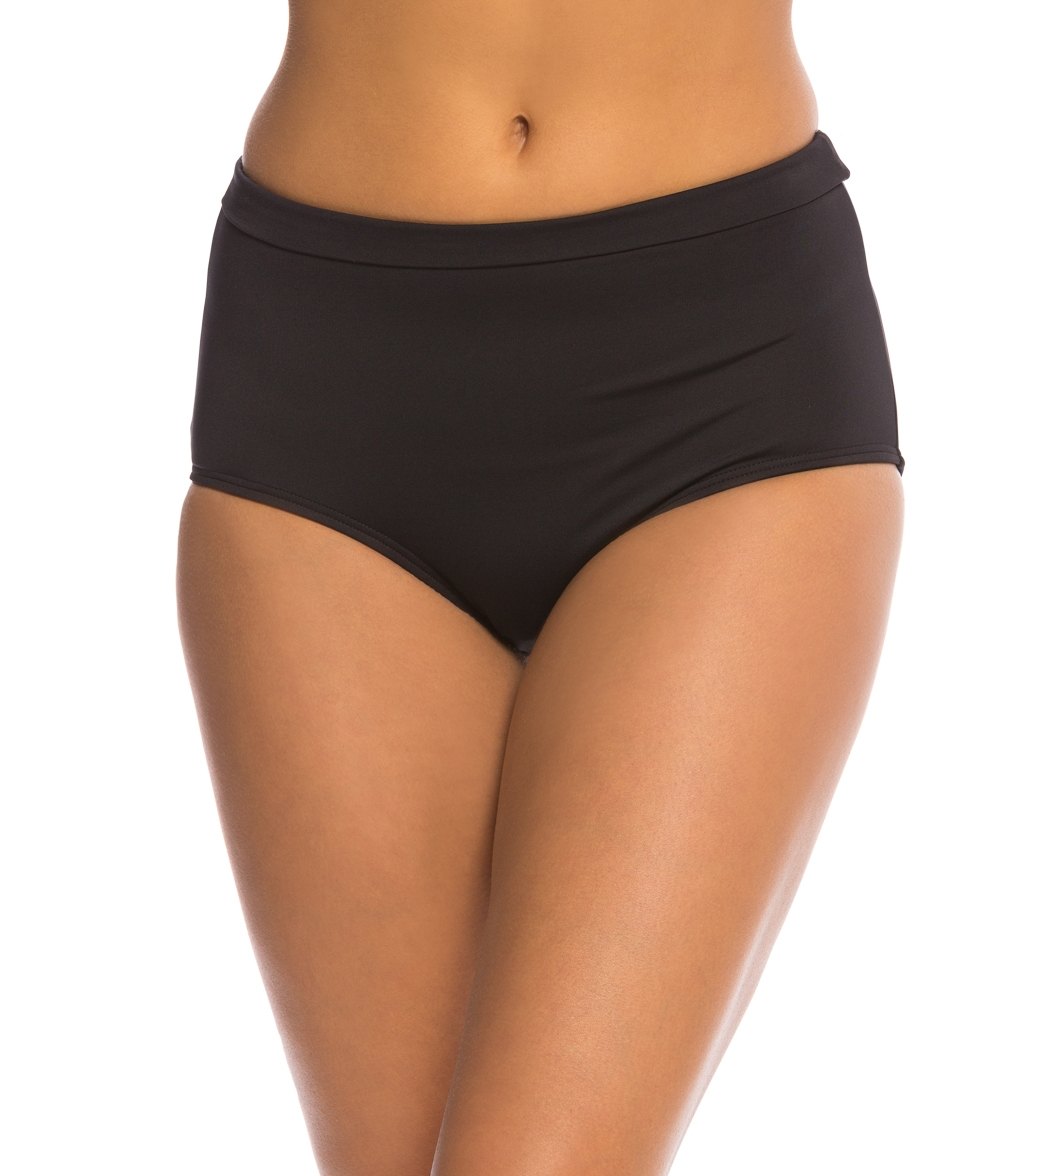 Coco Reef Classic Solid Power Pants Bikini Bottom - Castaway Black Large - Swimoutlet.com